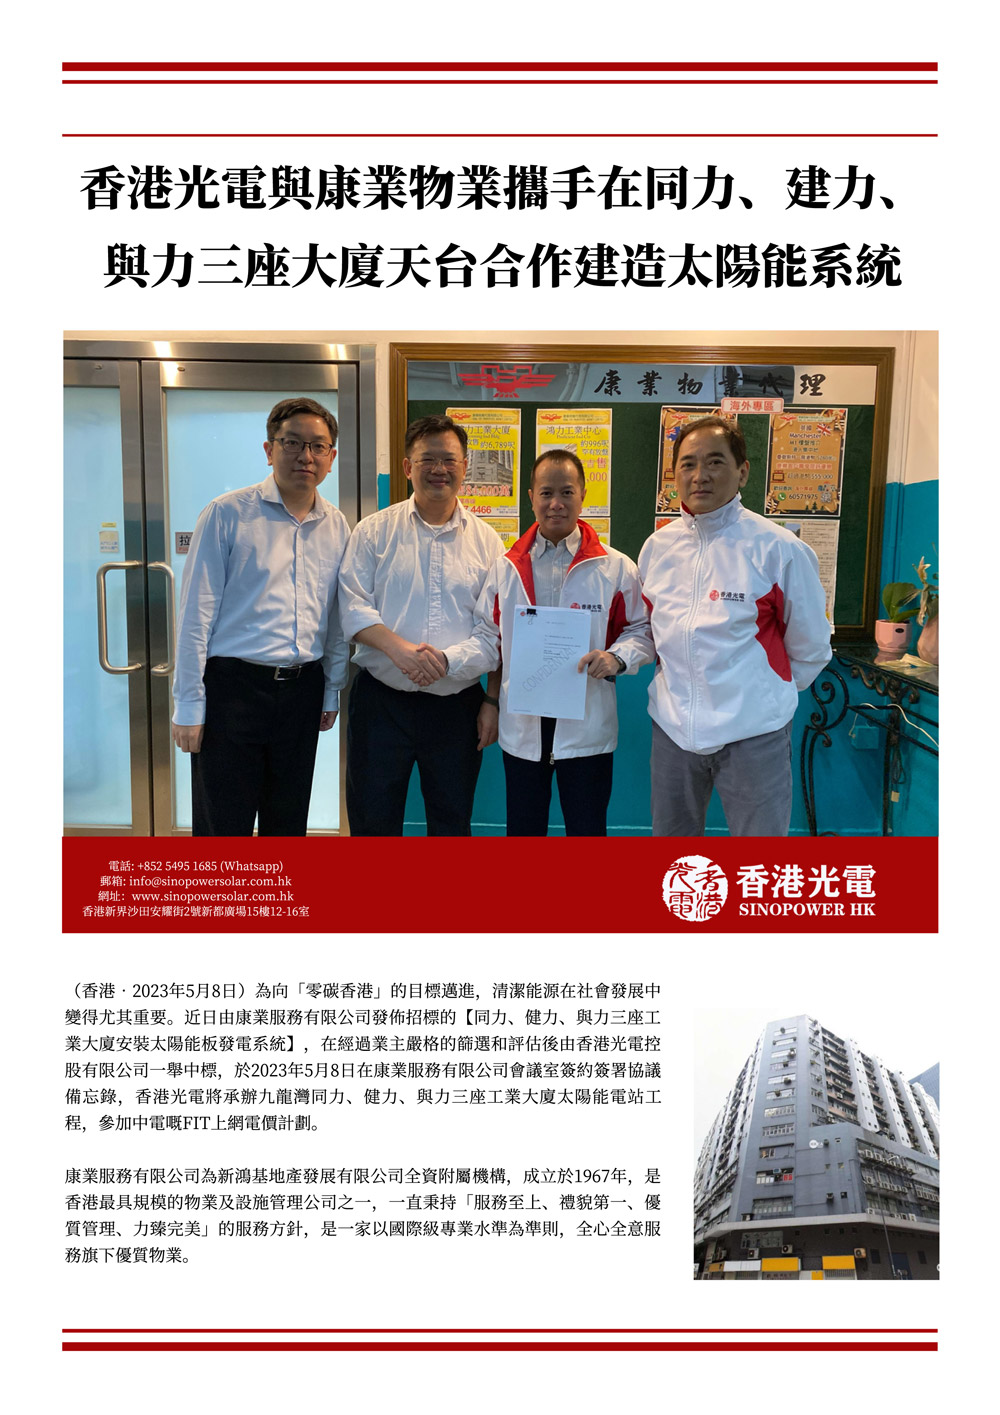 SP-Newsletter-202305期-香港光電與康業物業管理攜手在三台大廈天臺合作建造太陽能系統-1.jpg